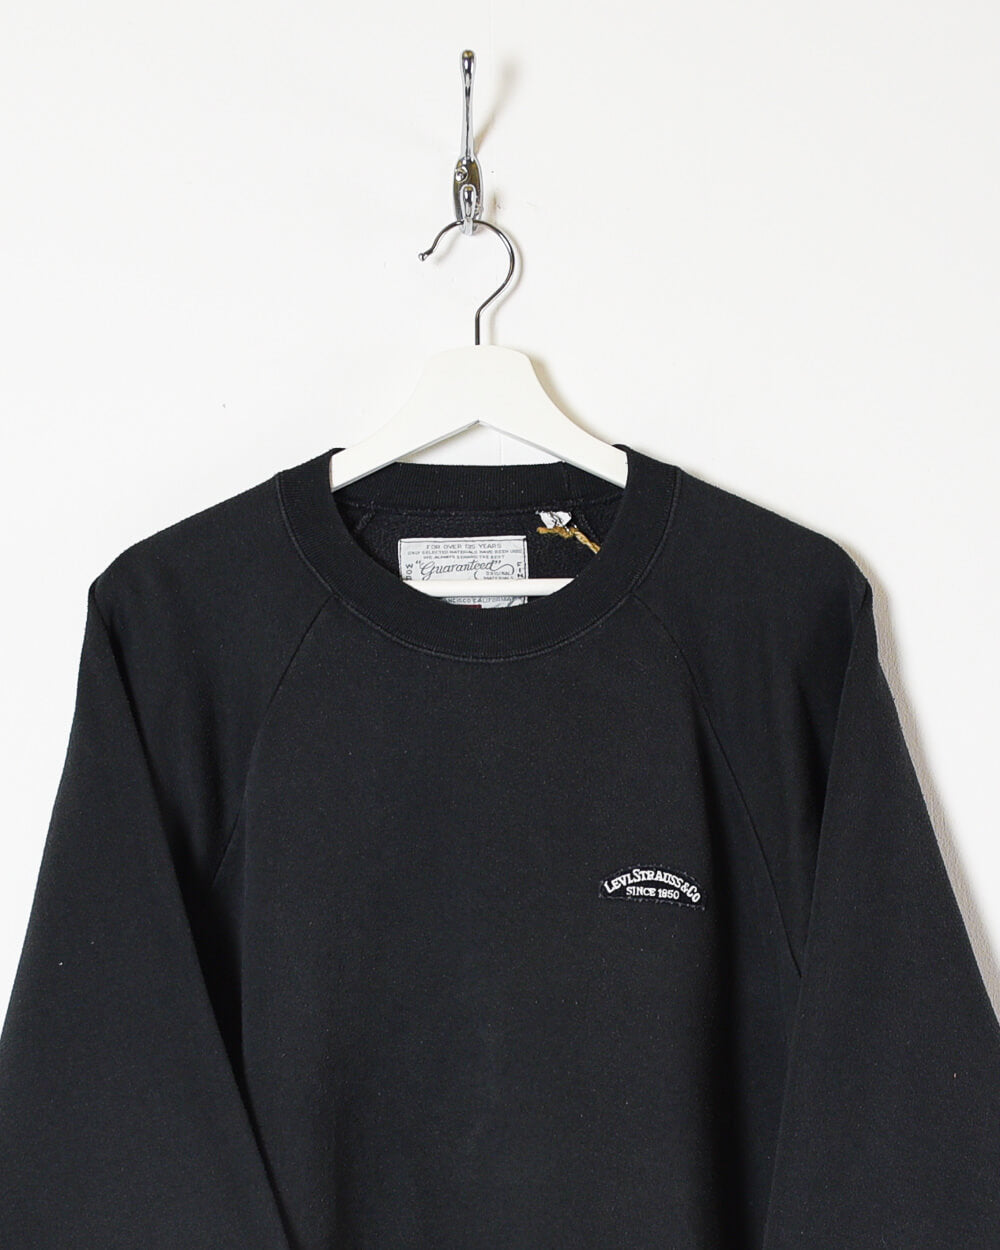 Black Levi Strauss & Co Since 1850 Sweatshirt - Medium